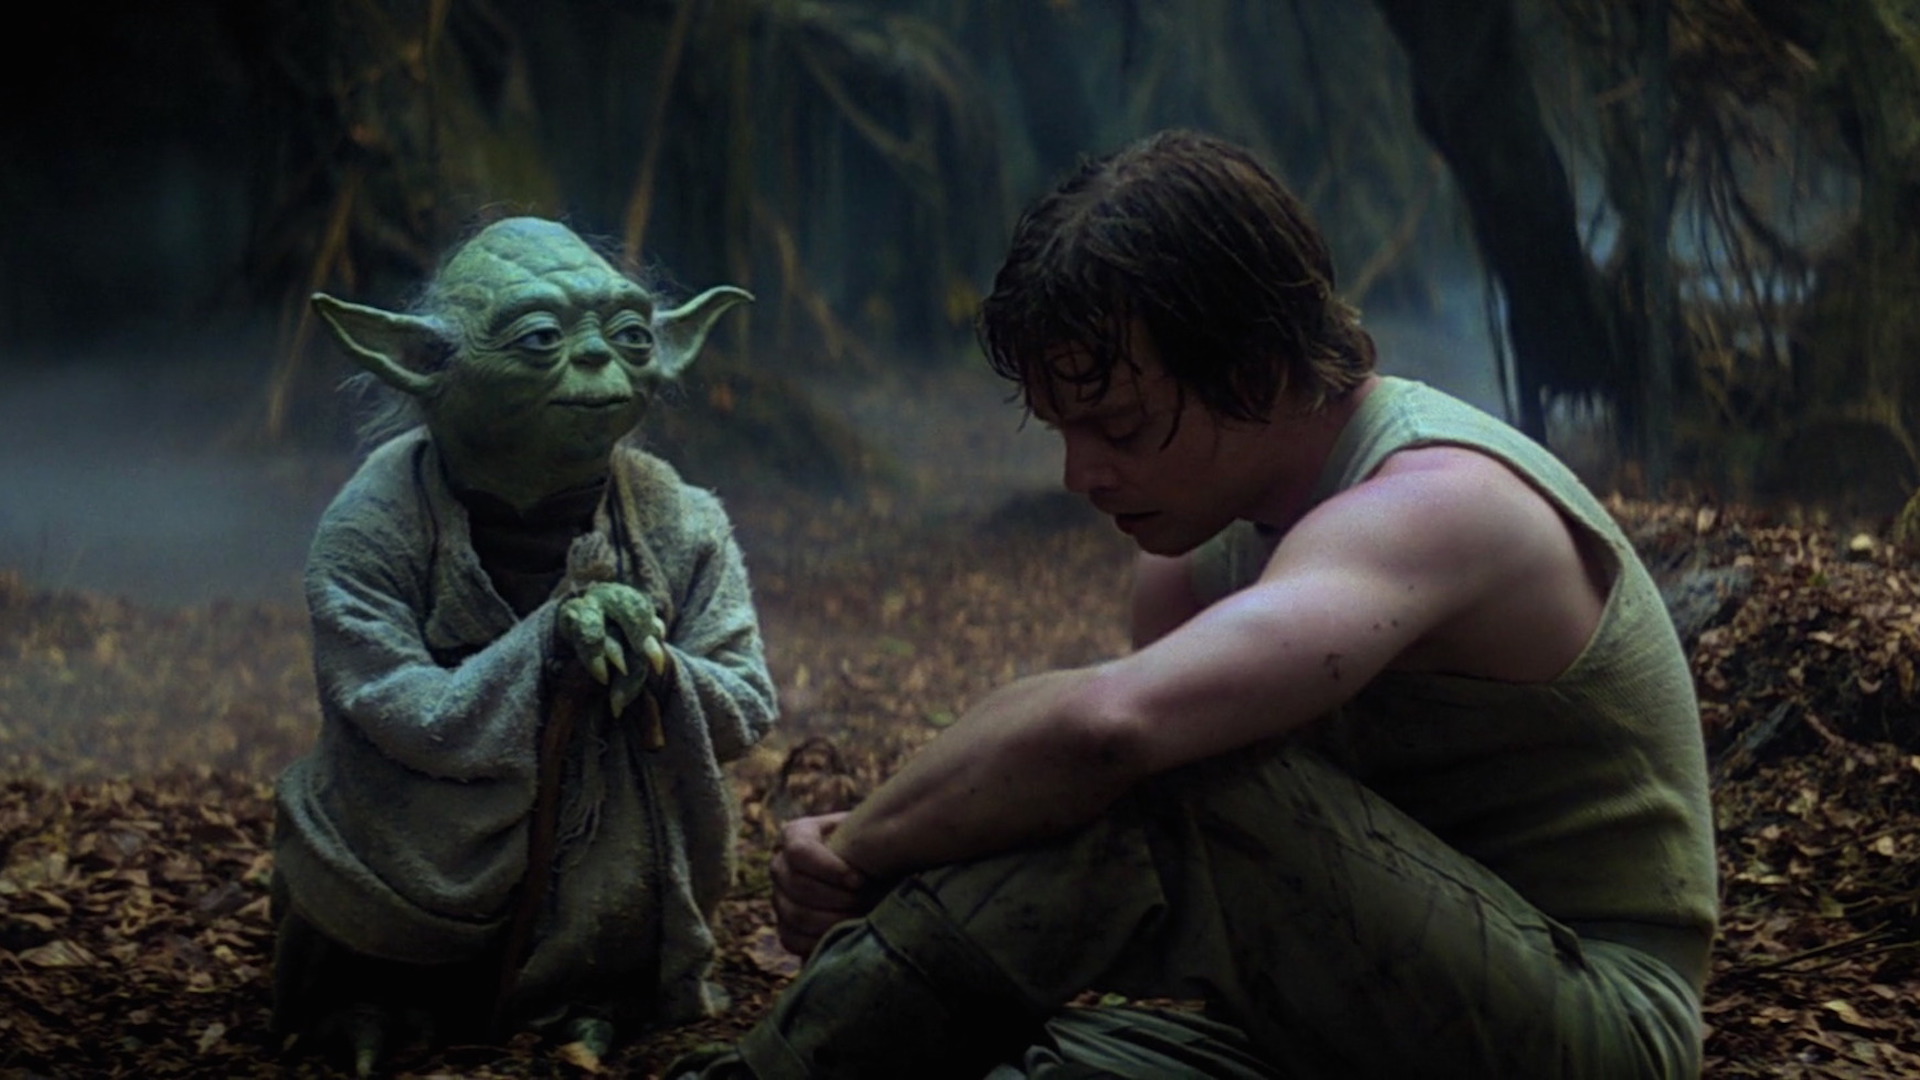 Yoda and Luke on Dagobah